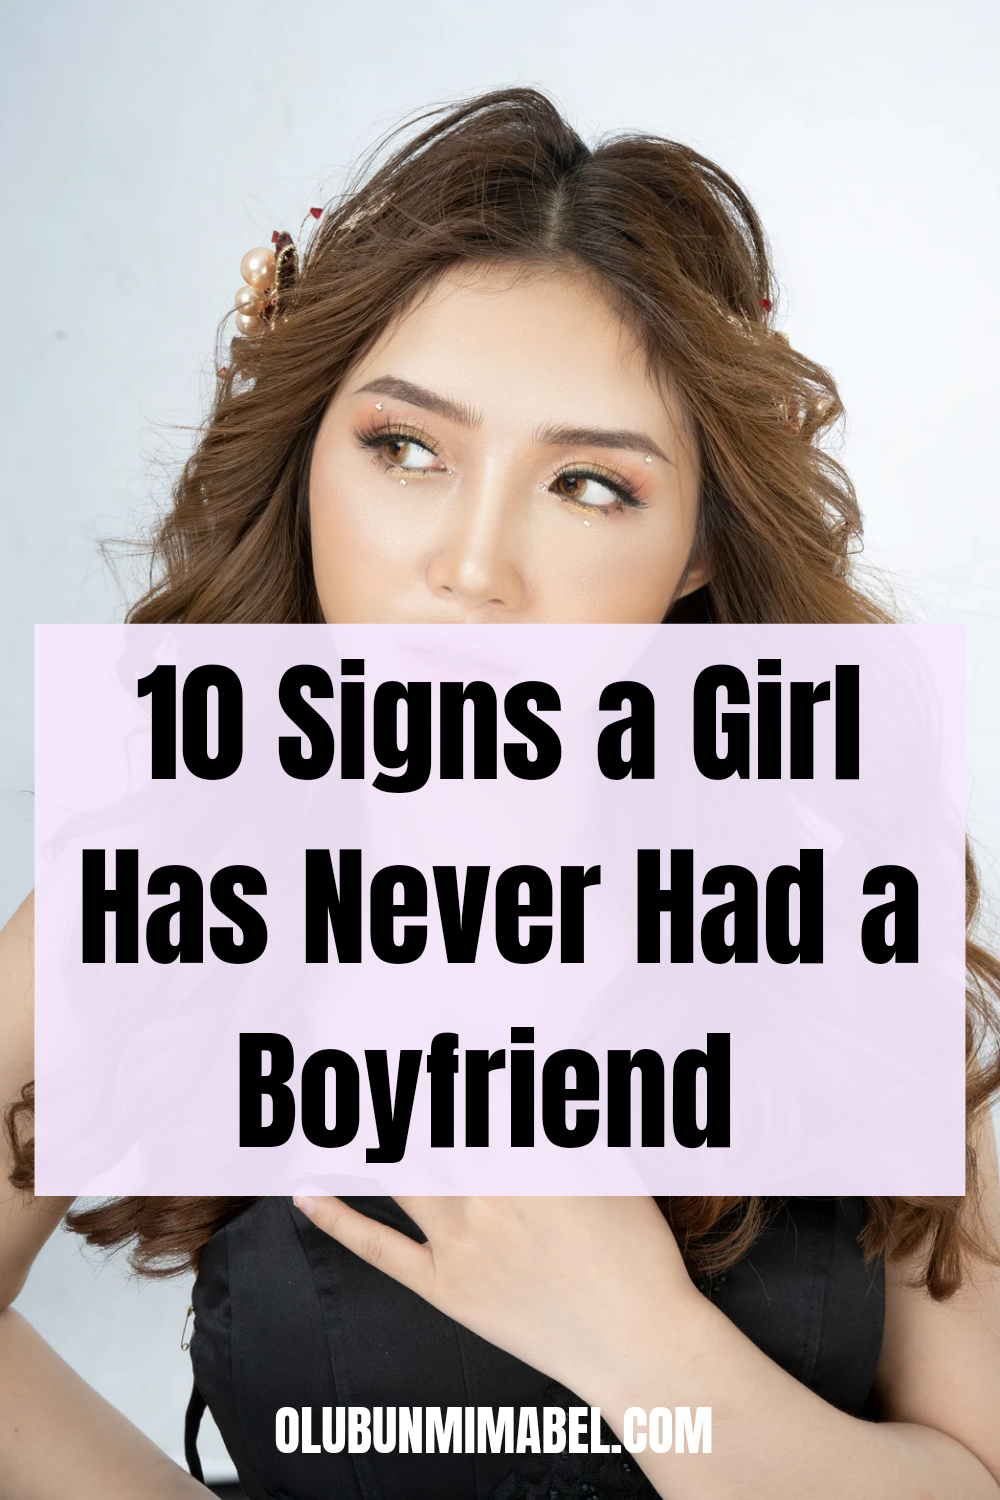 Signs a Girl Has Never Had a Boyfriend